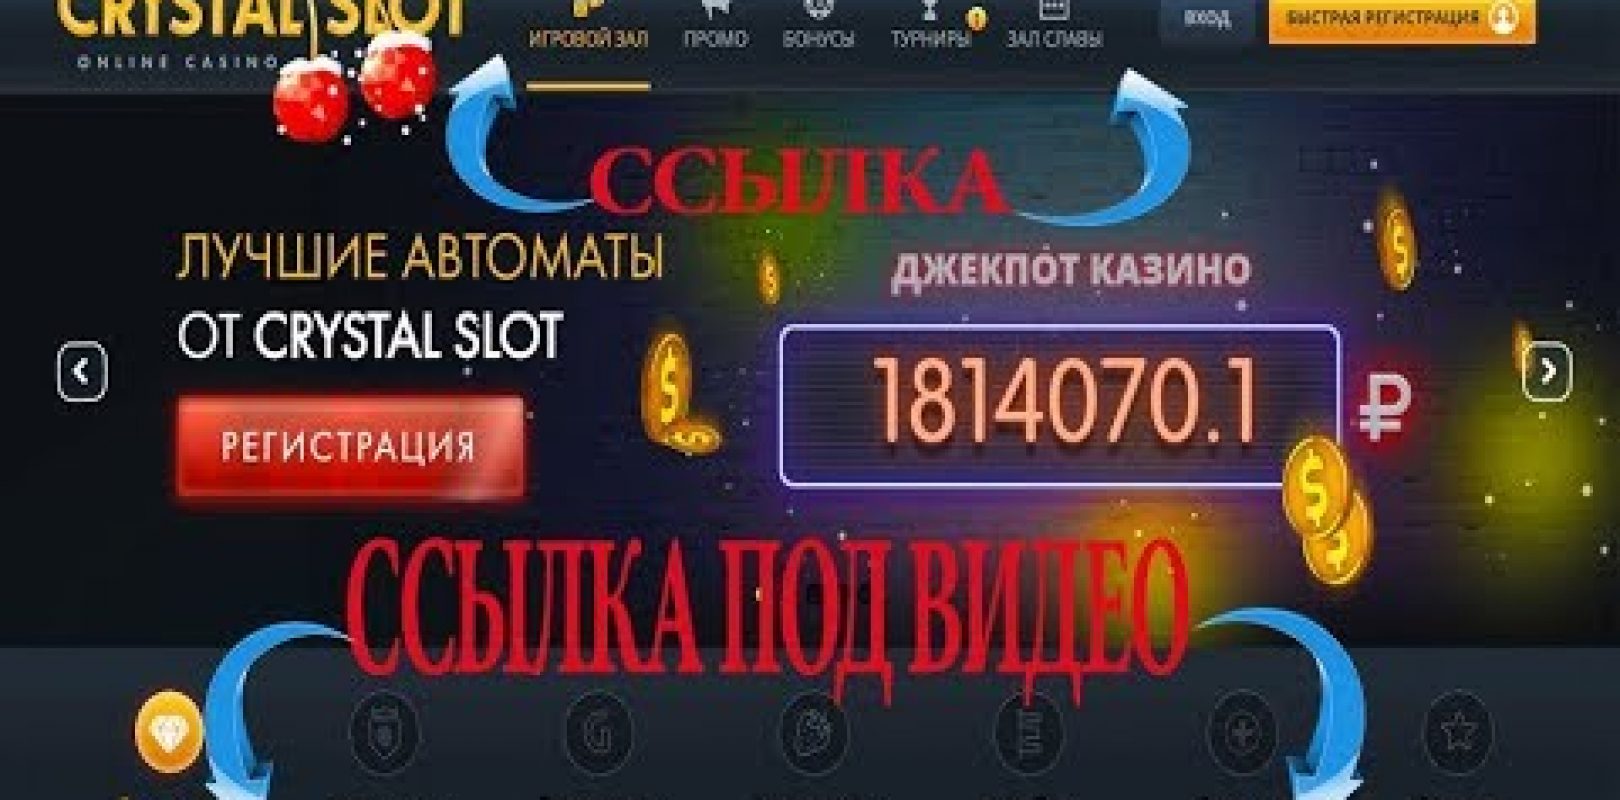 Boa reputacao casinos online